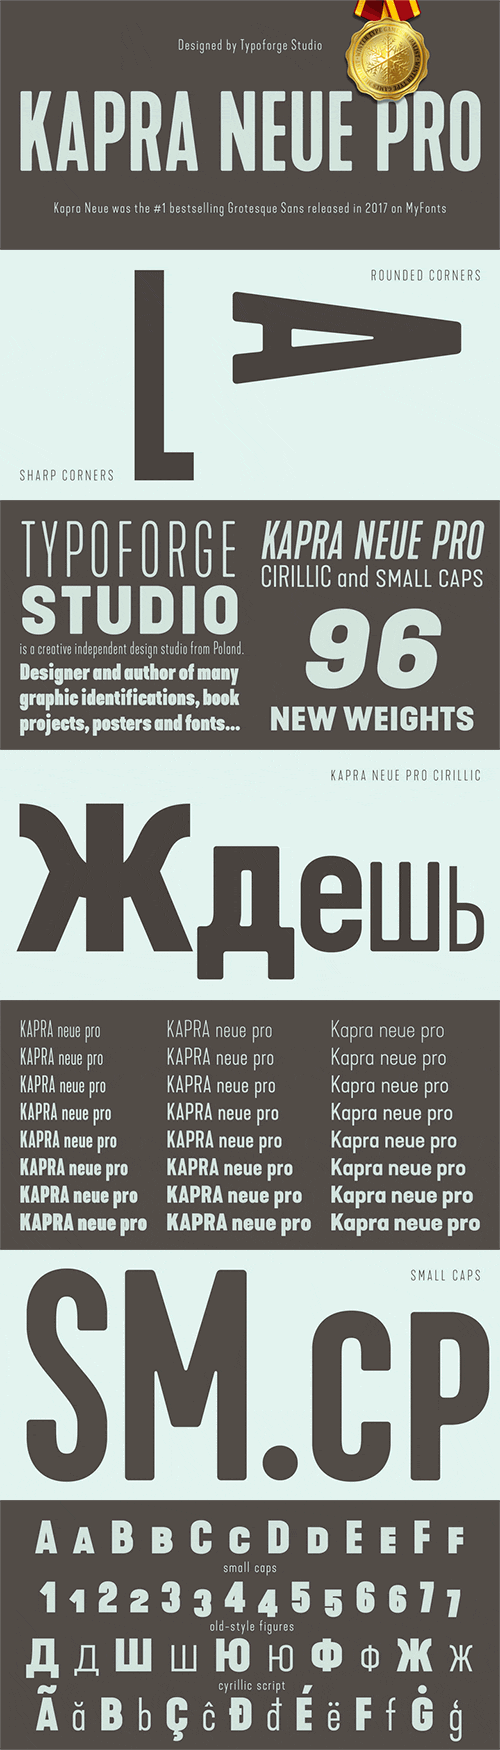 Kapra Neue Pro font family